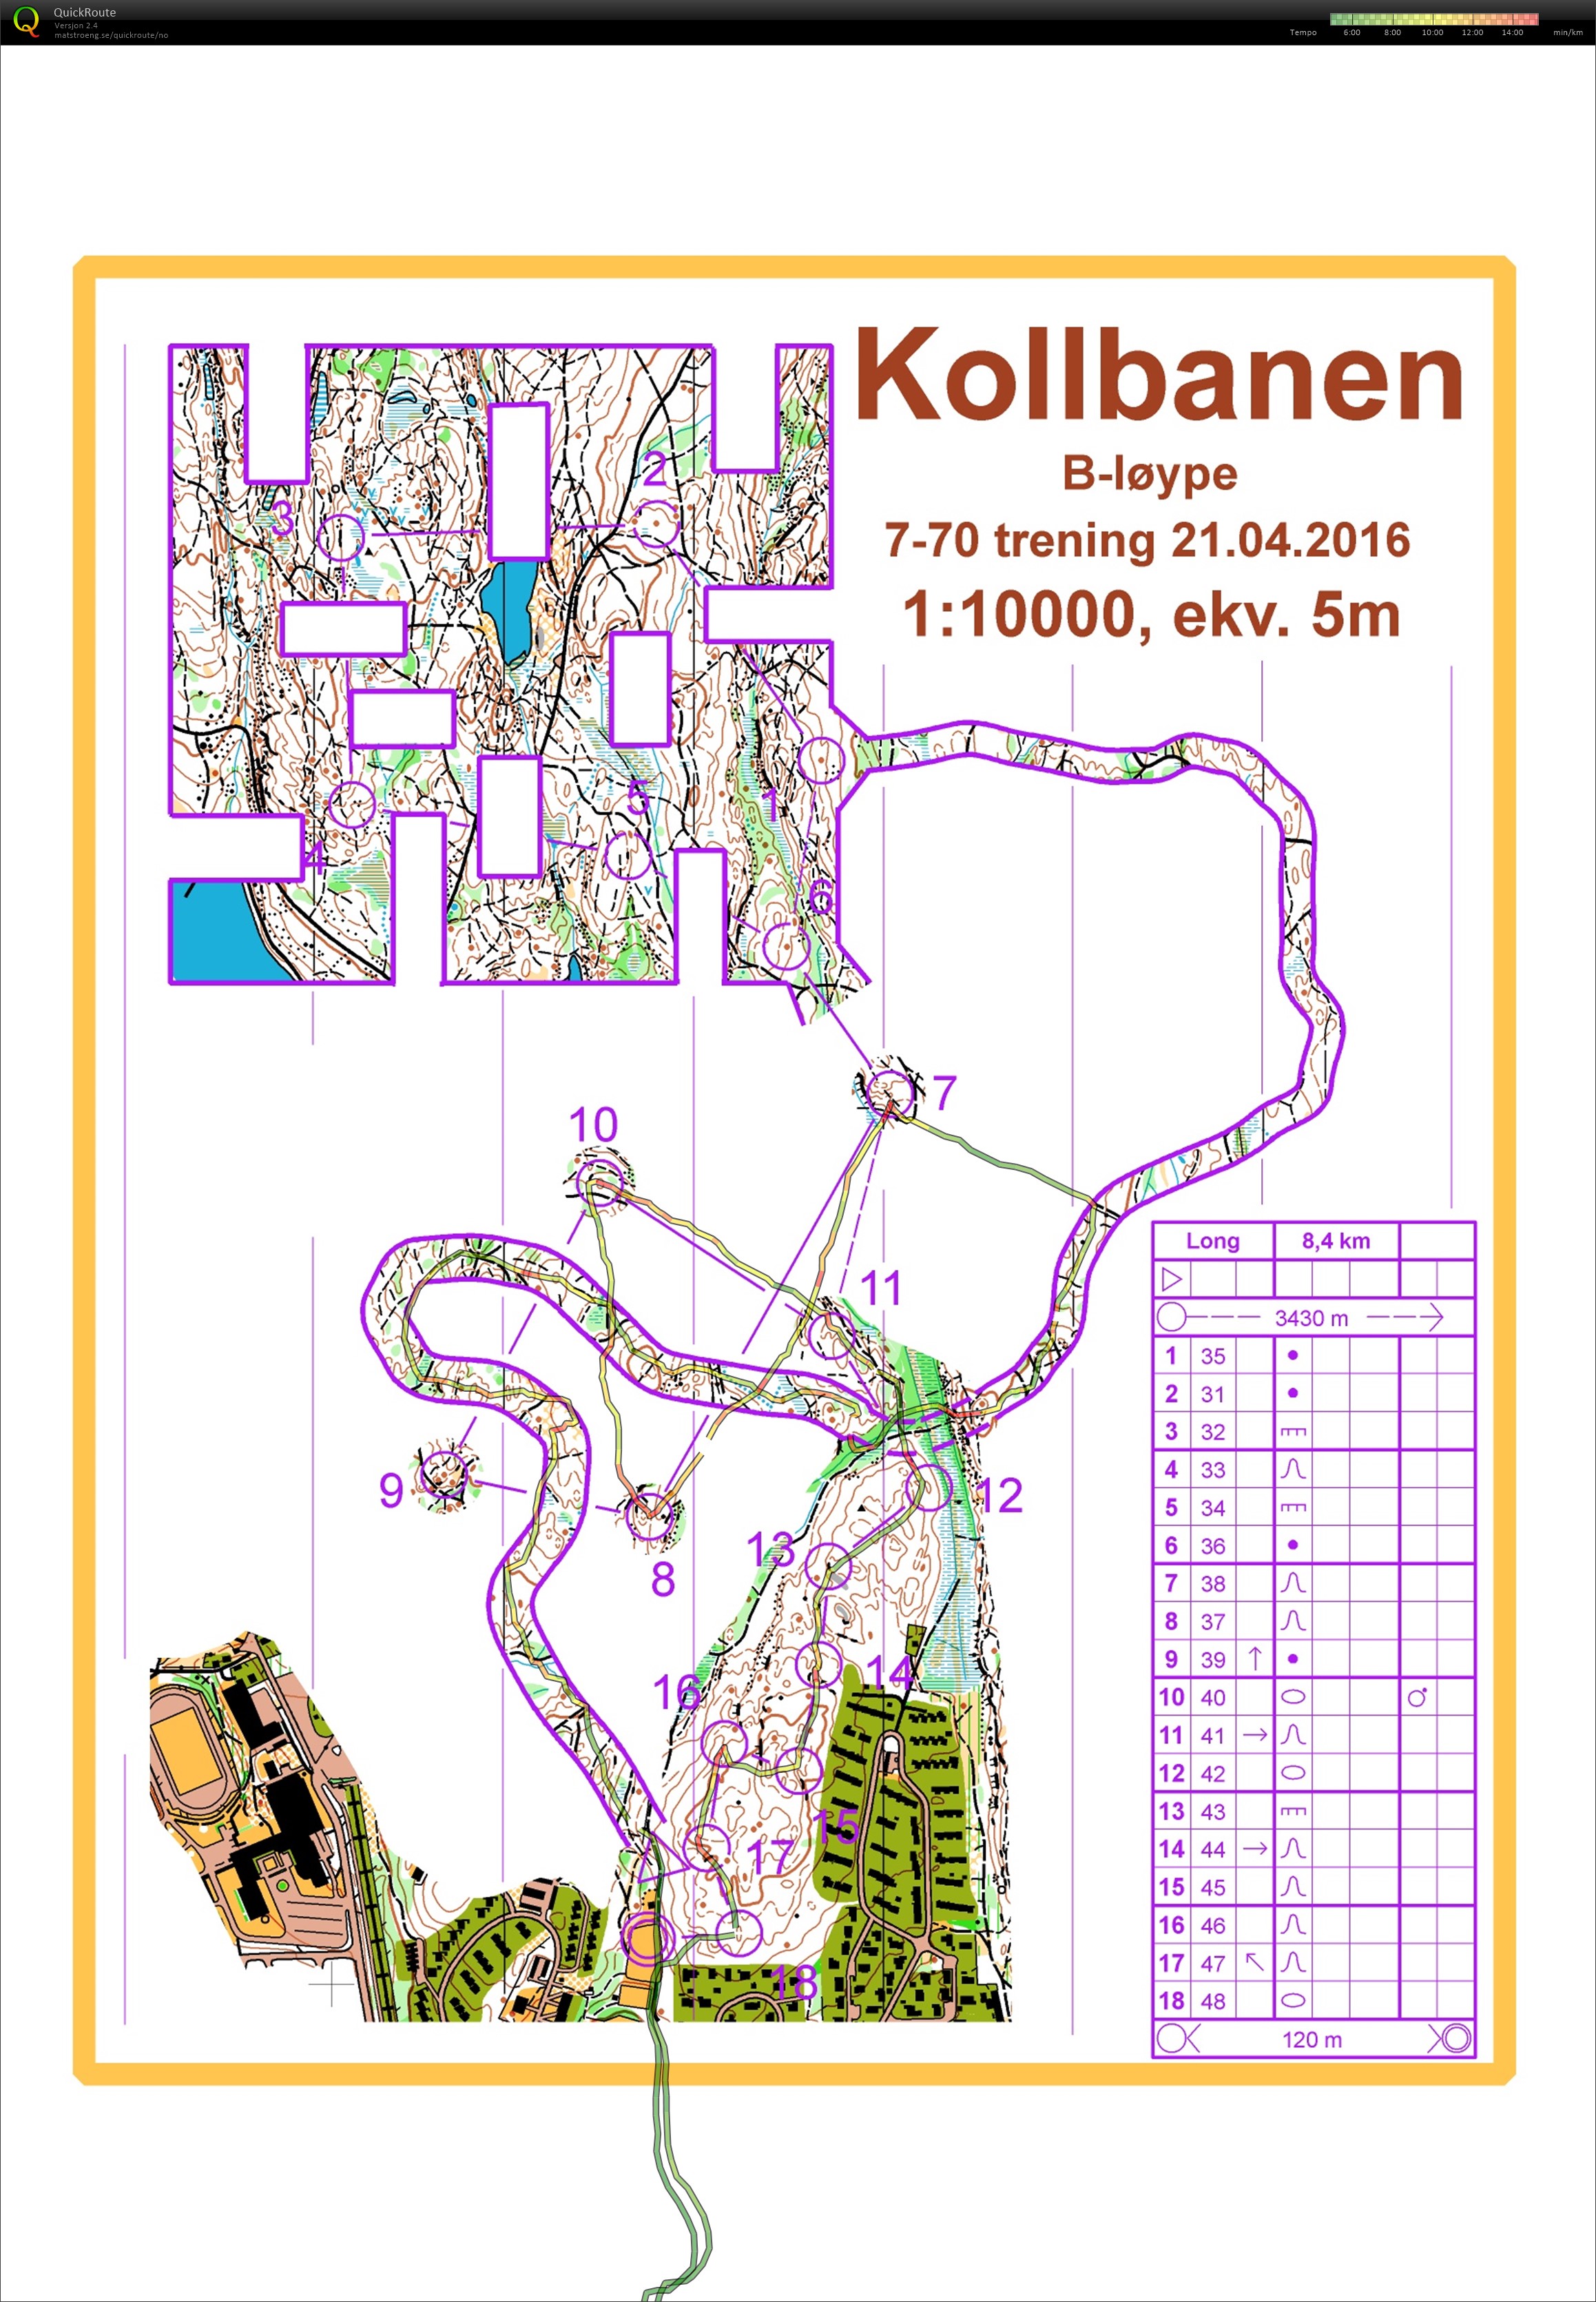 7-70 Kollbanen Rerun (20-06-2017)